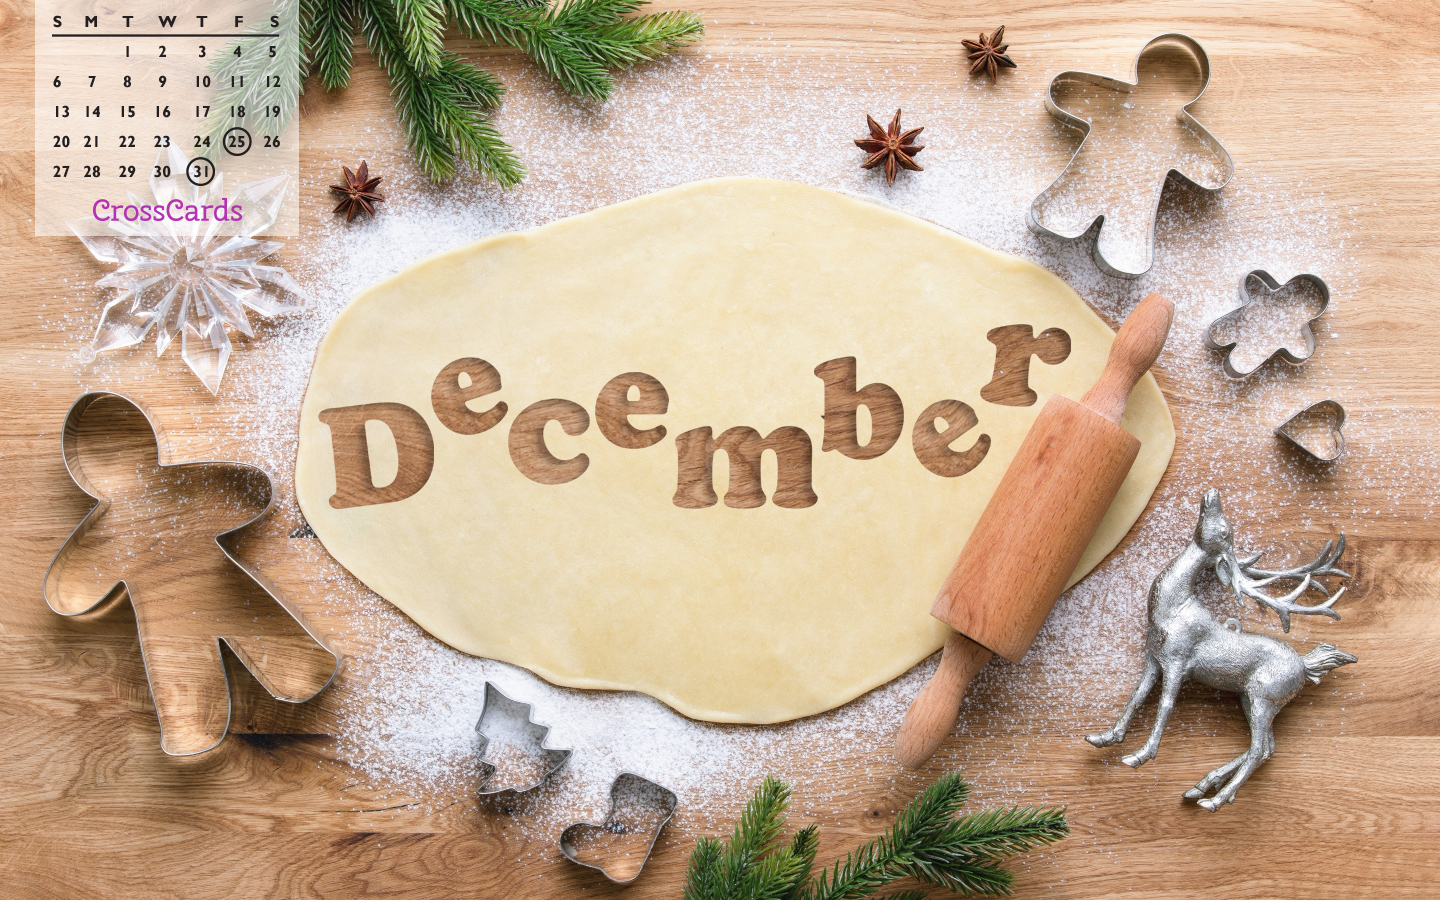 December 2020 - Christmas Cookies mobile phone wallpaper